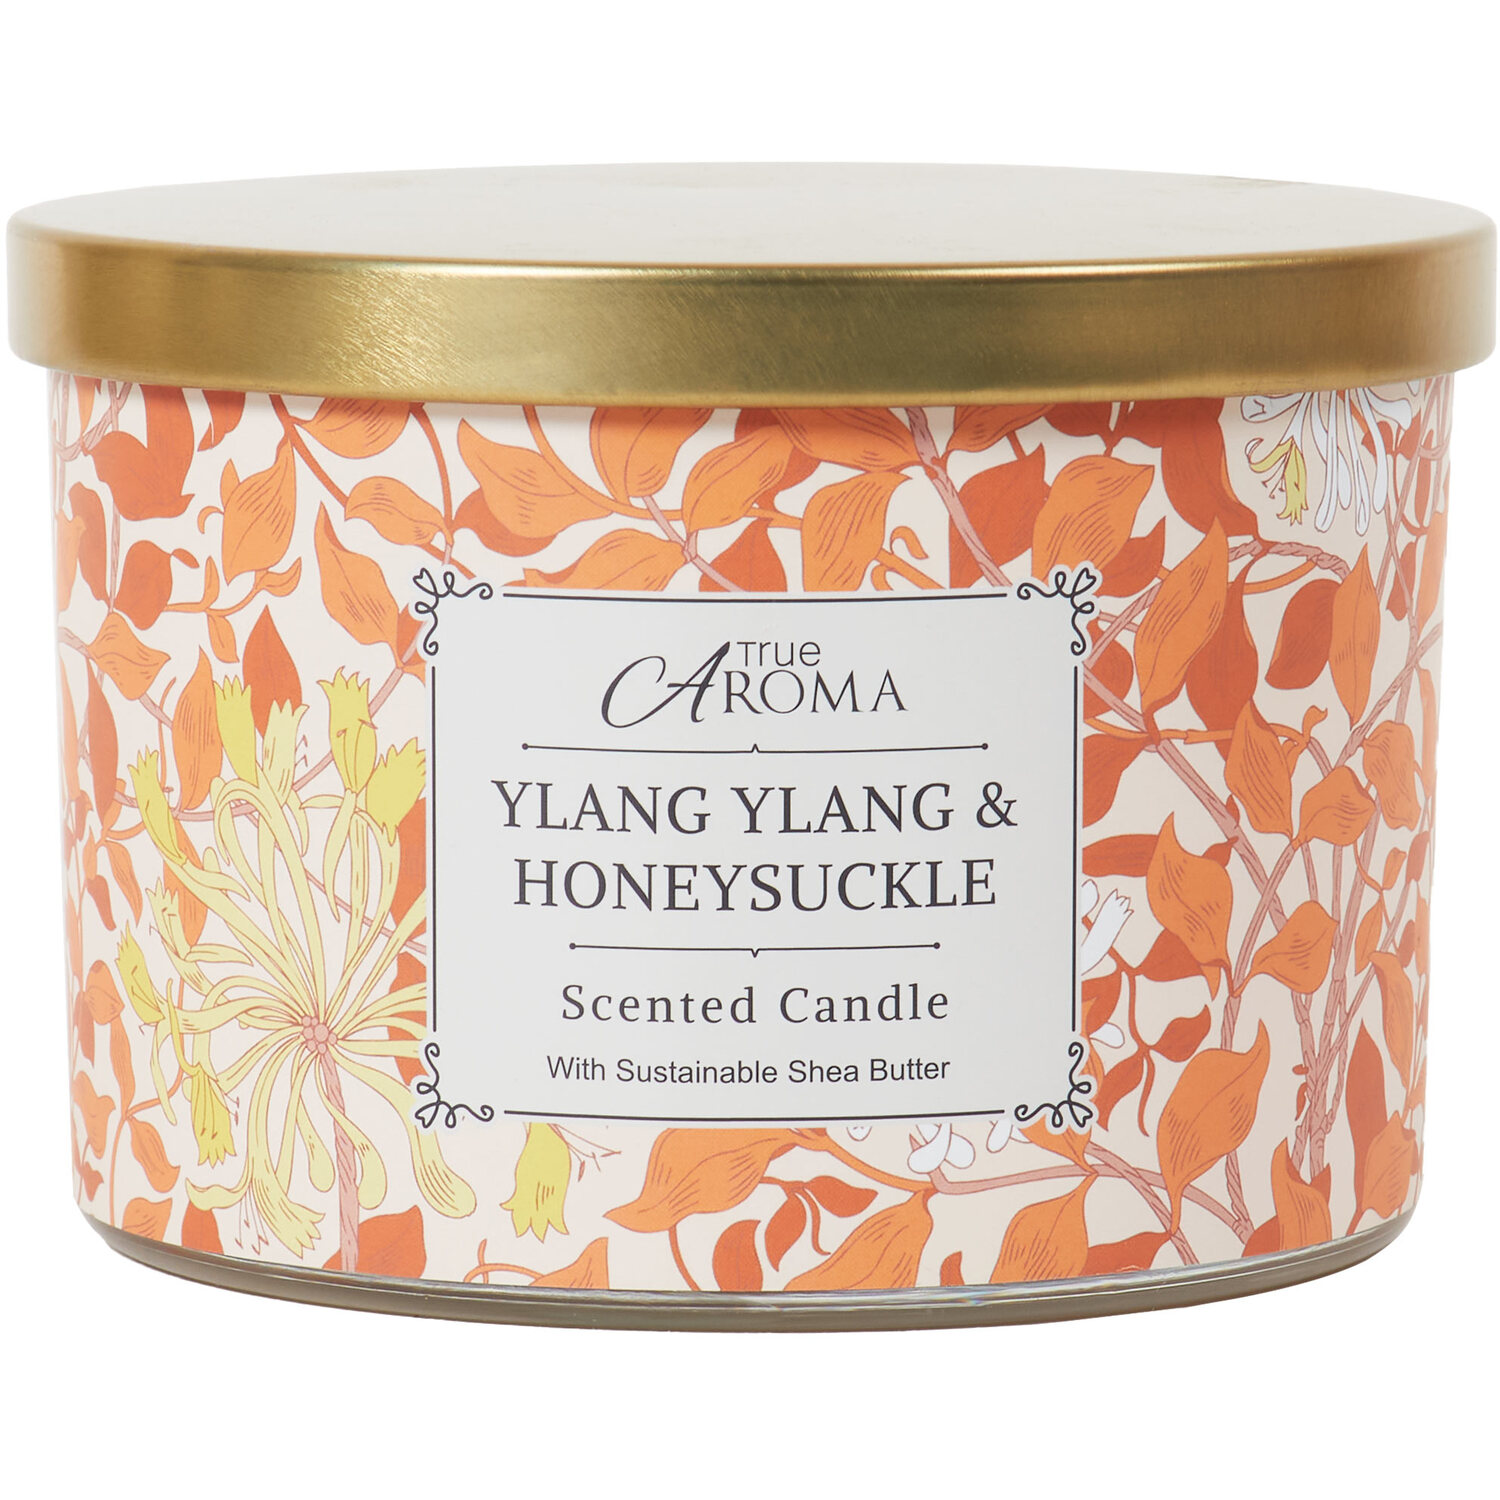 Ylang Ylang & Honeysuckle Candle - Orange Image 1